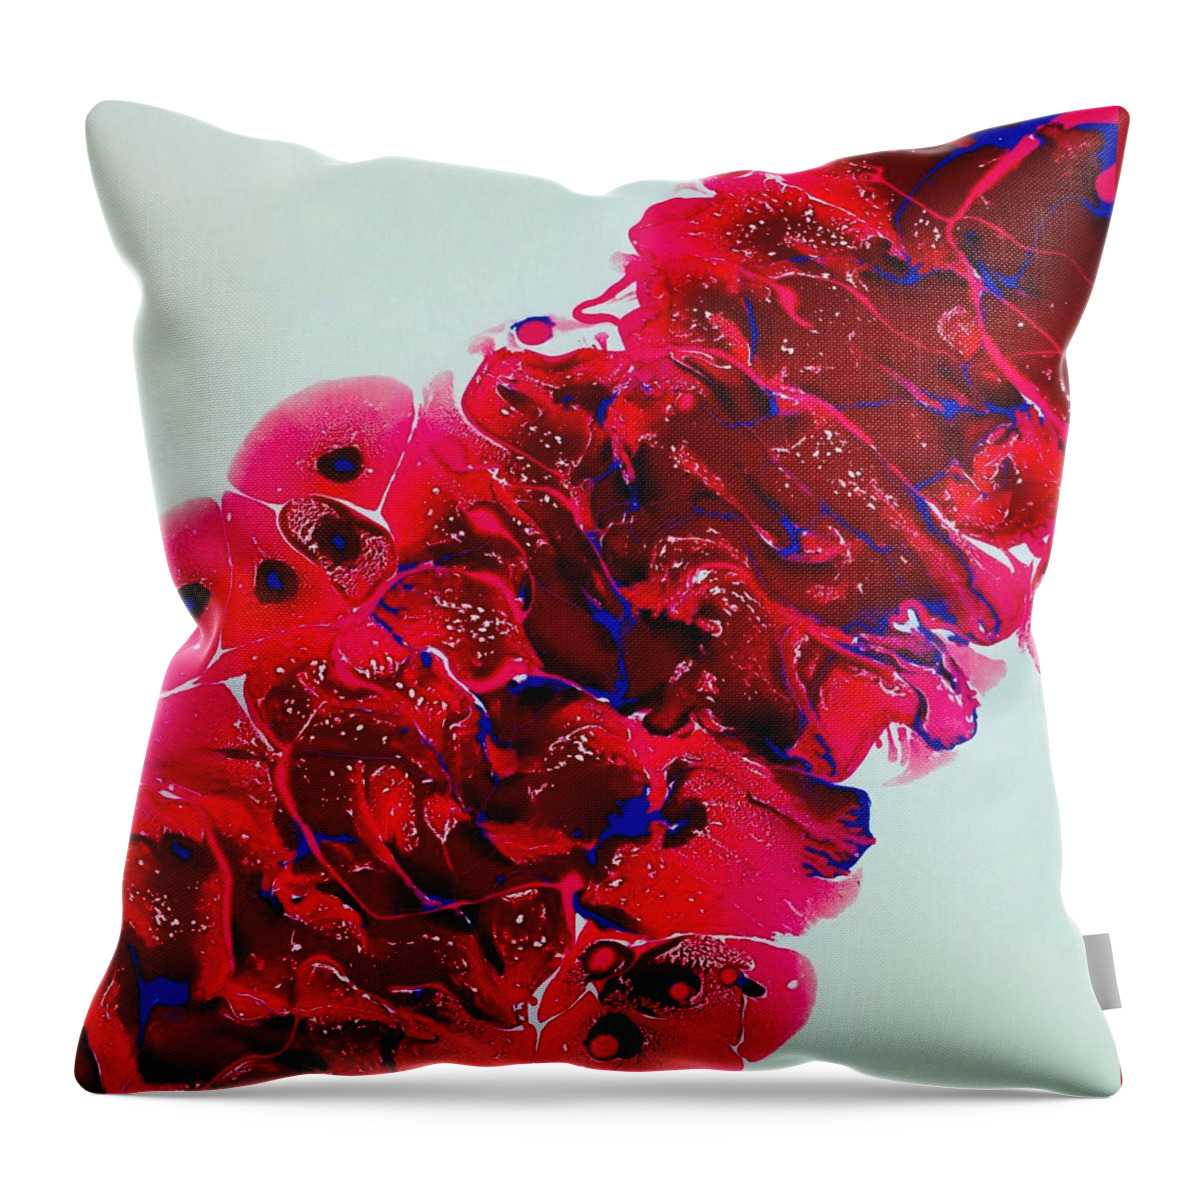 Acrylic Throw Pillow featuring the mixed media Metamorphosis In Progress by Rhonda Abshire-Wiatrek